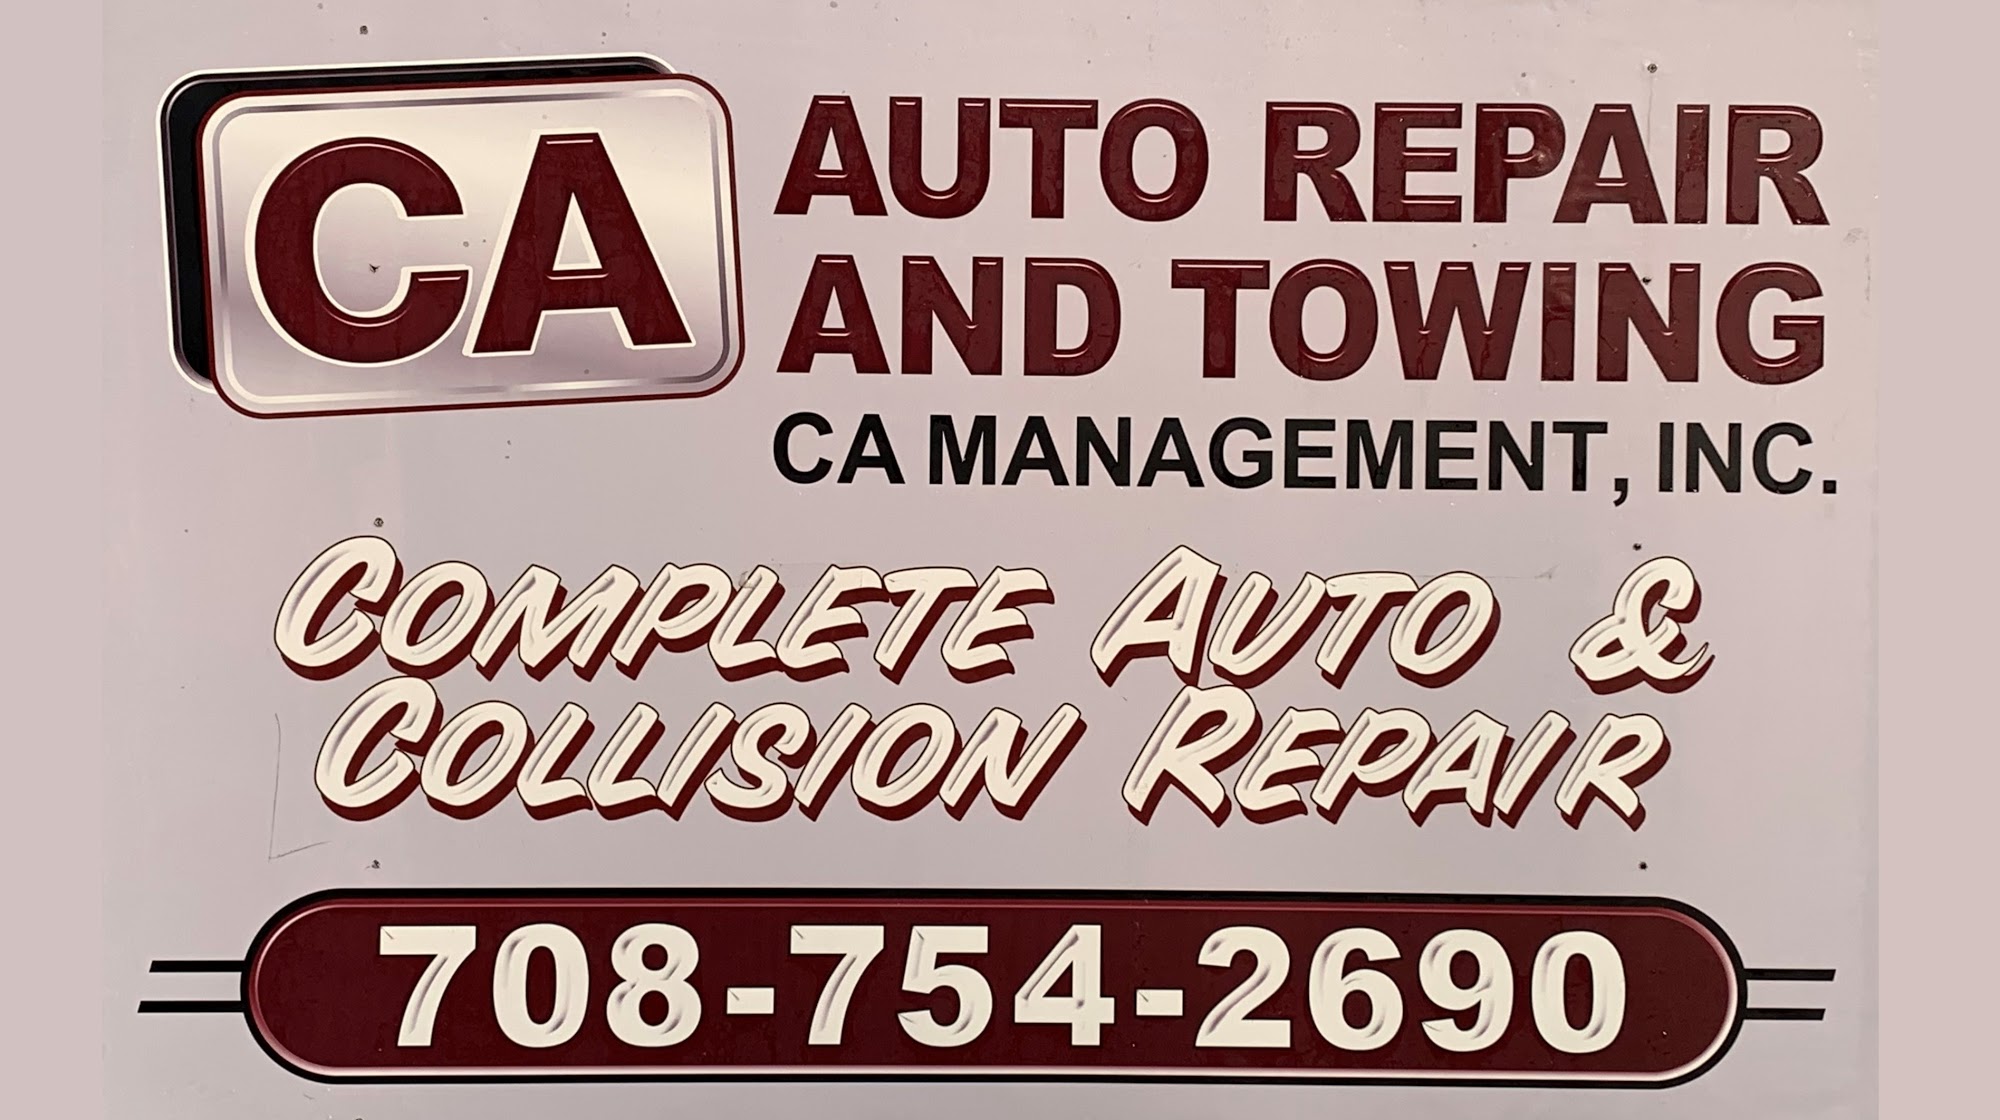 C & A Auto Repair & Towing